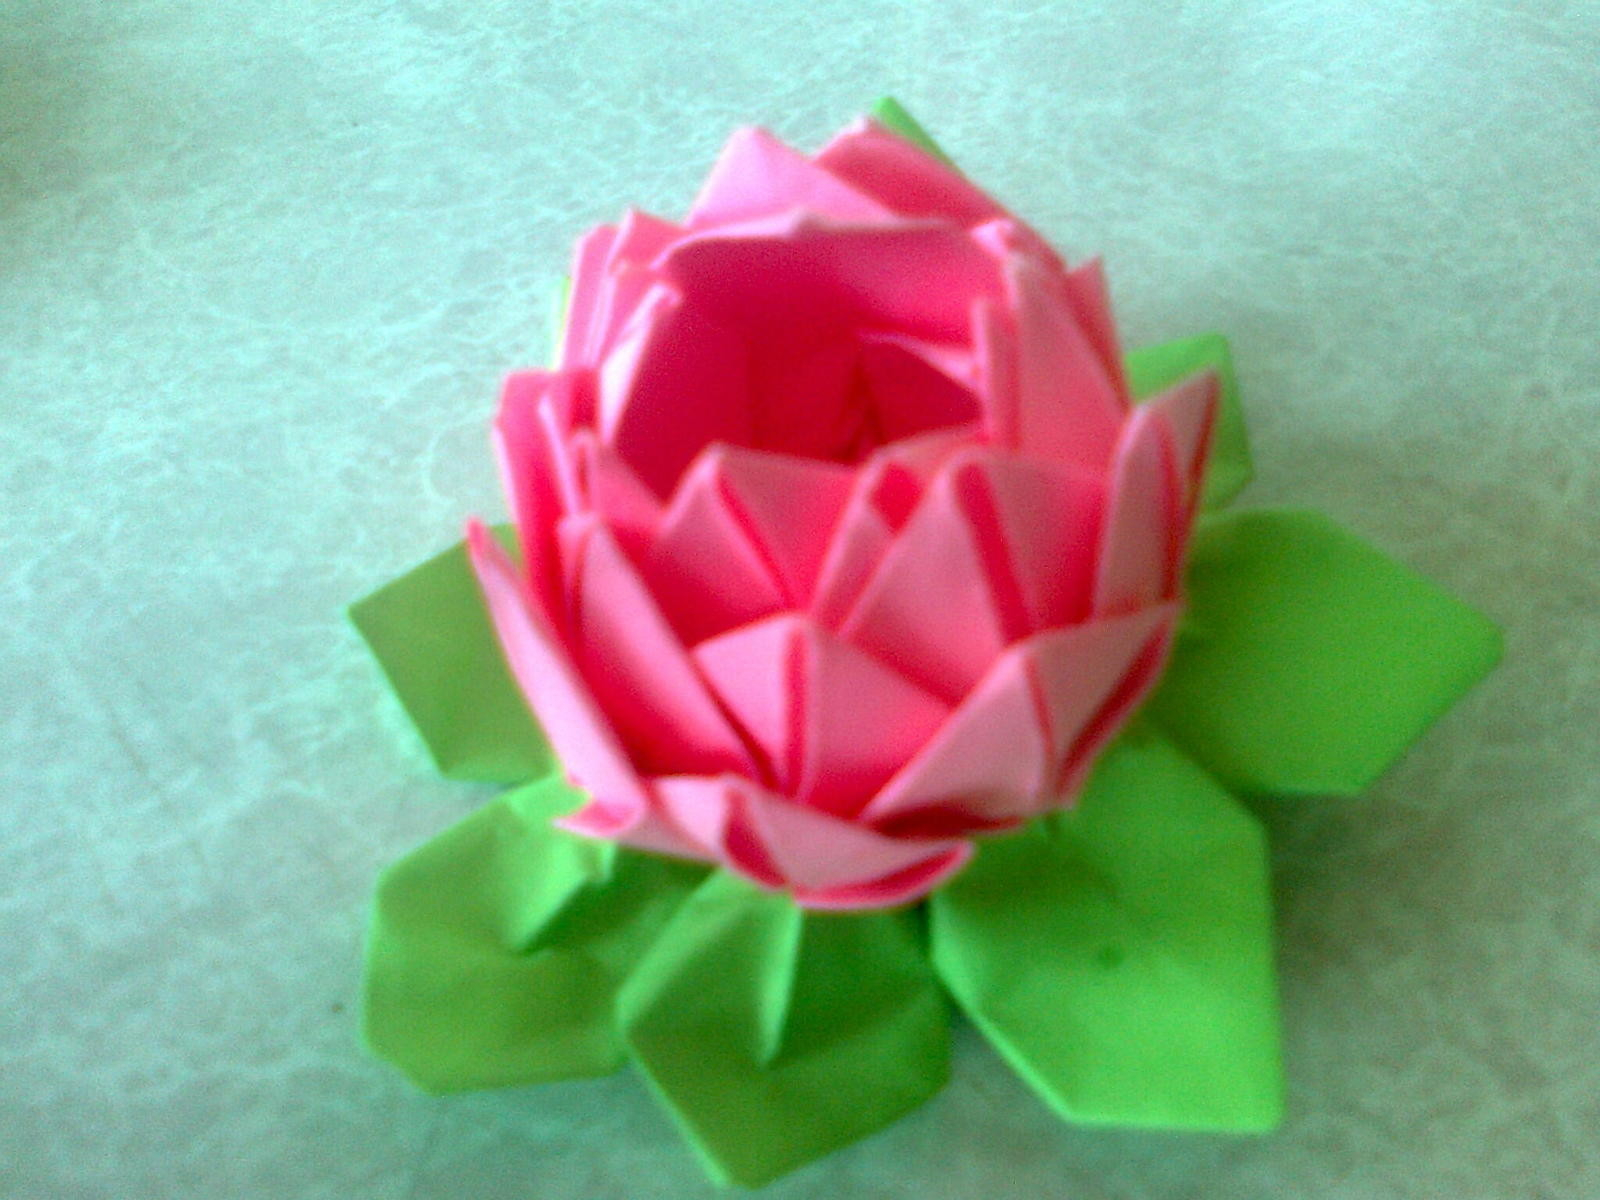 How To Make Origami Lotus Flower Video Lotus Flower Spring Tutorial How To Fold An Origami Lotus